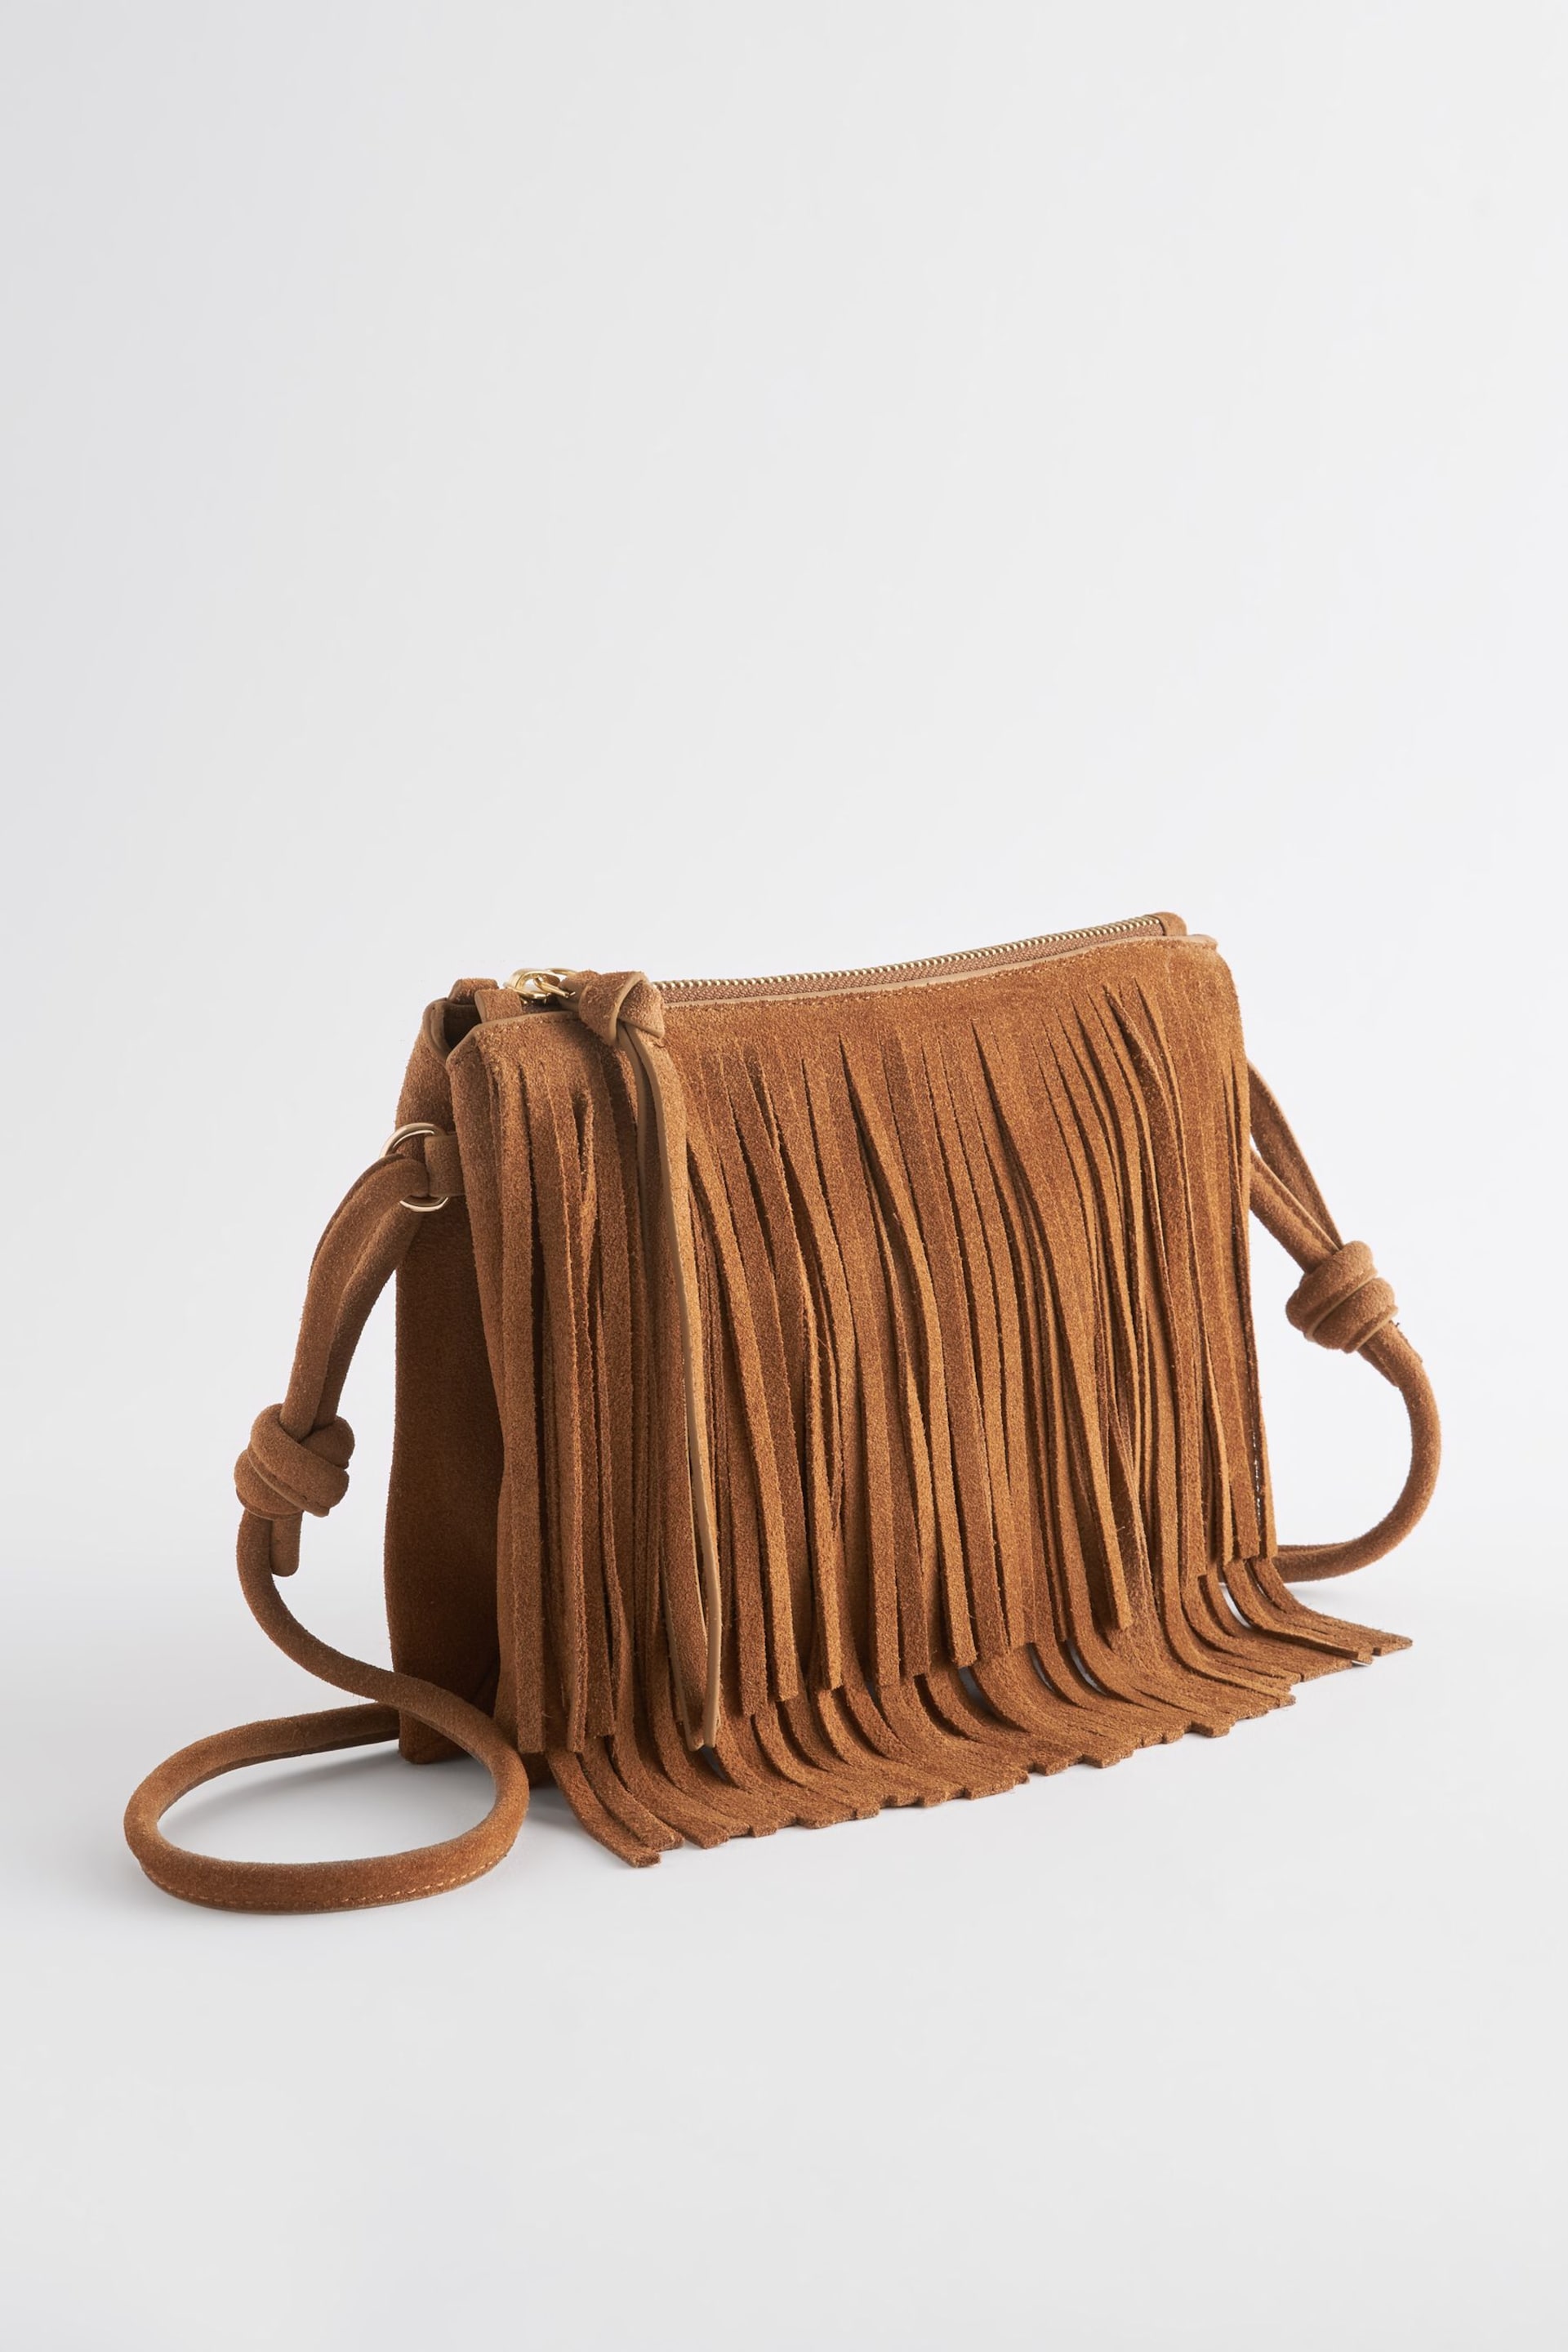 Tan Brown Leather Fringe Western Cross-Body Bag - Image 6 of 10